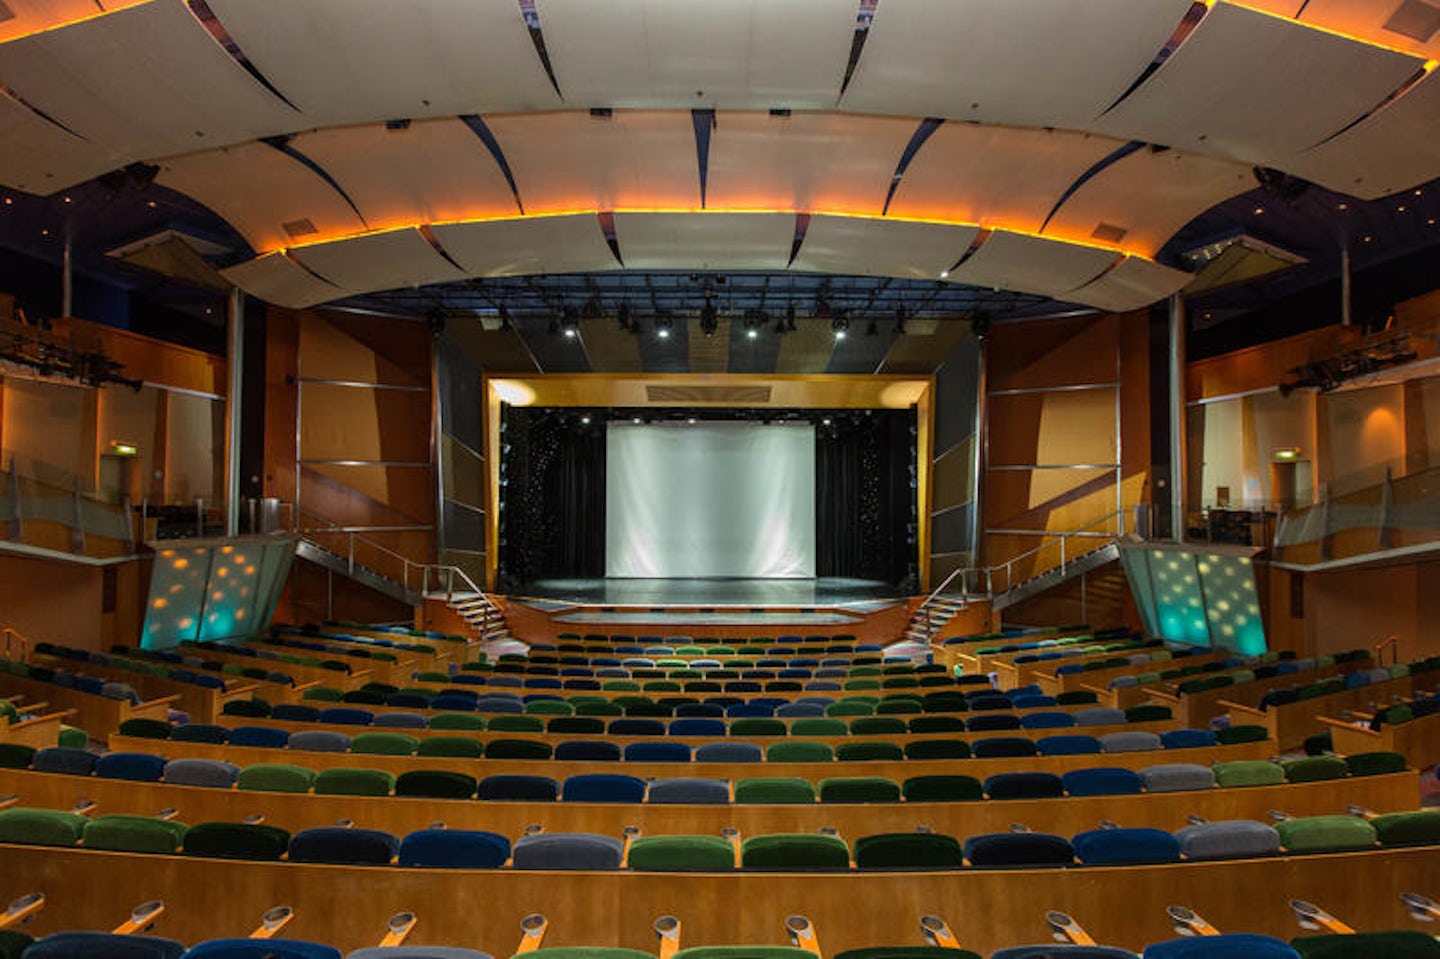 Aurora Theater on Radiance of the Seas